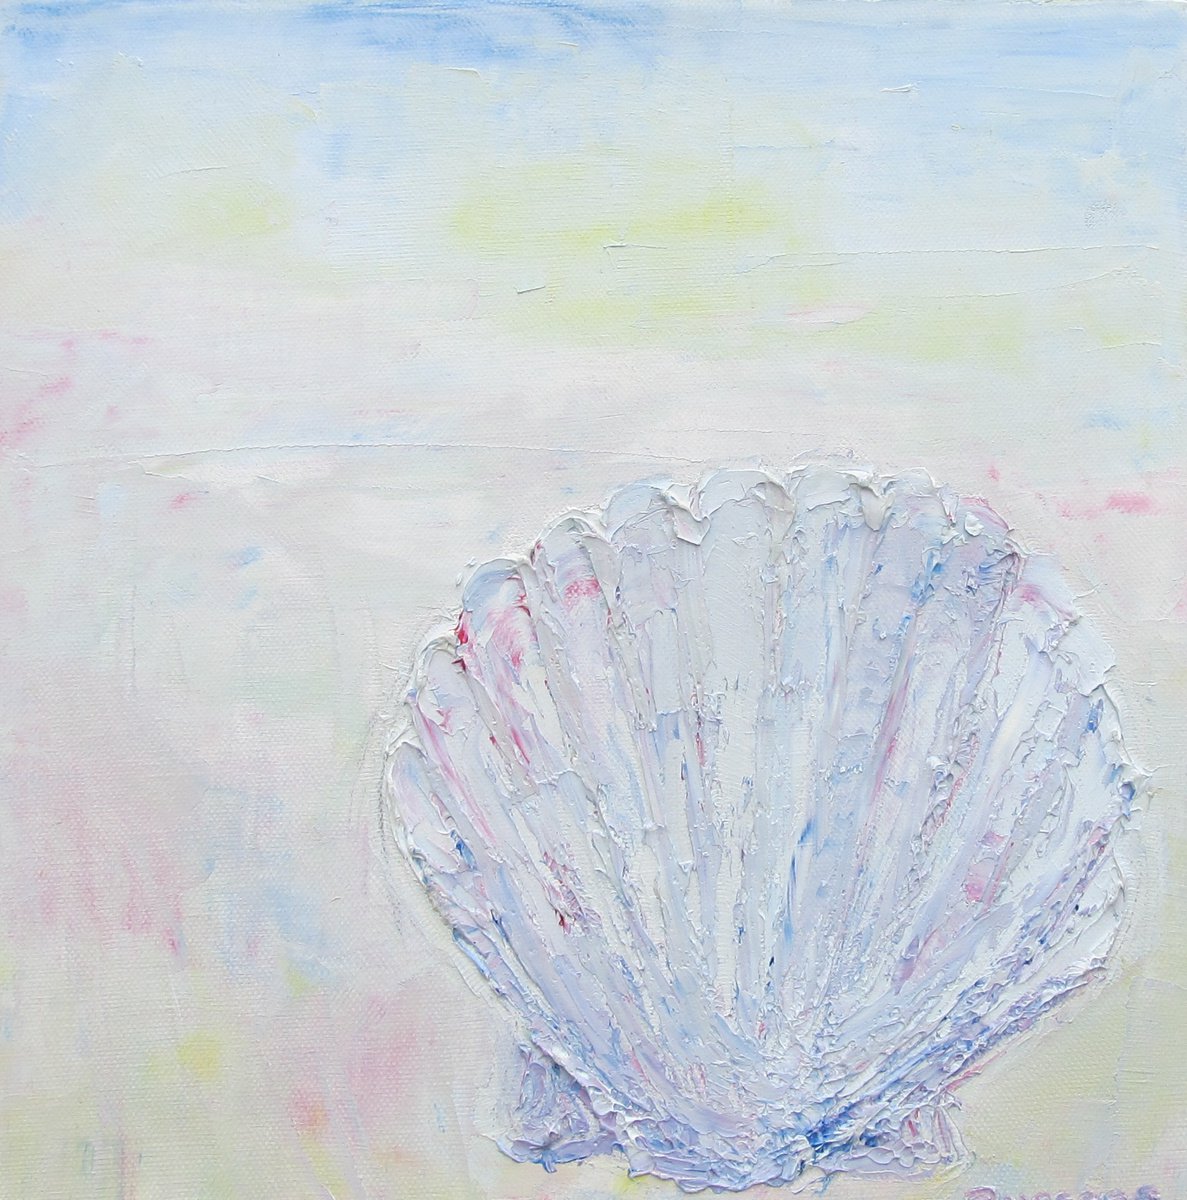 Shell by Brenda Burgess